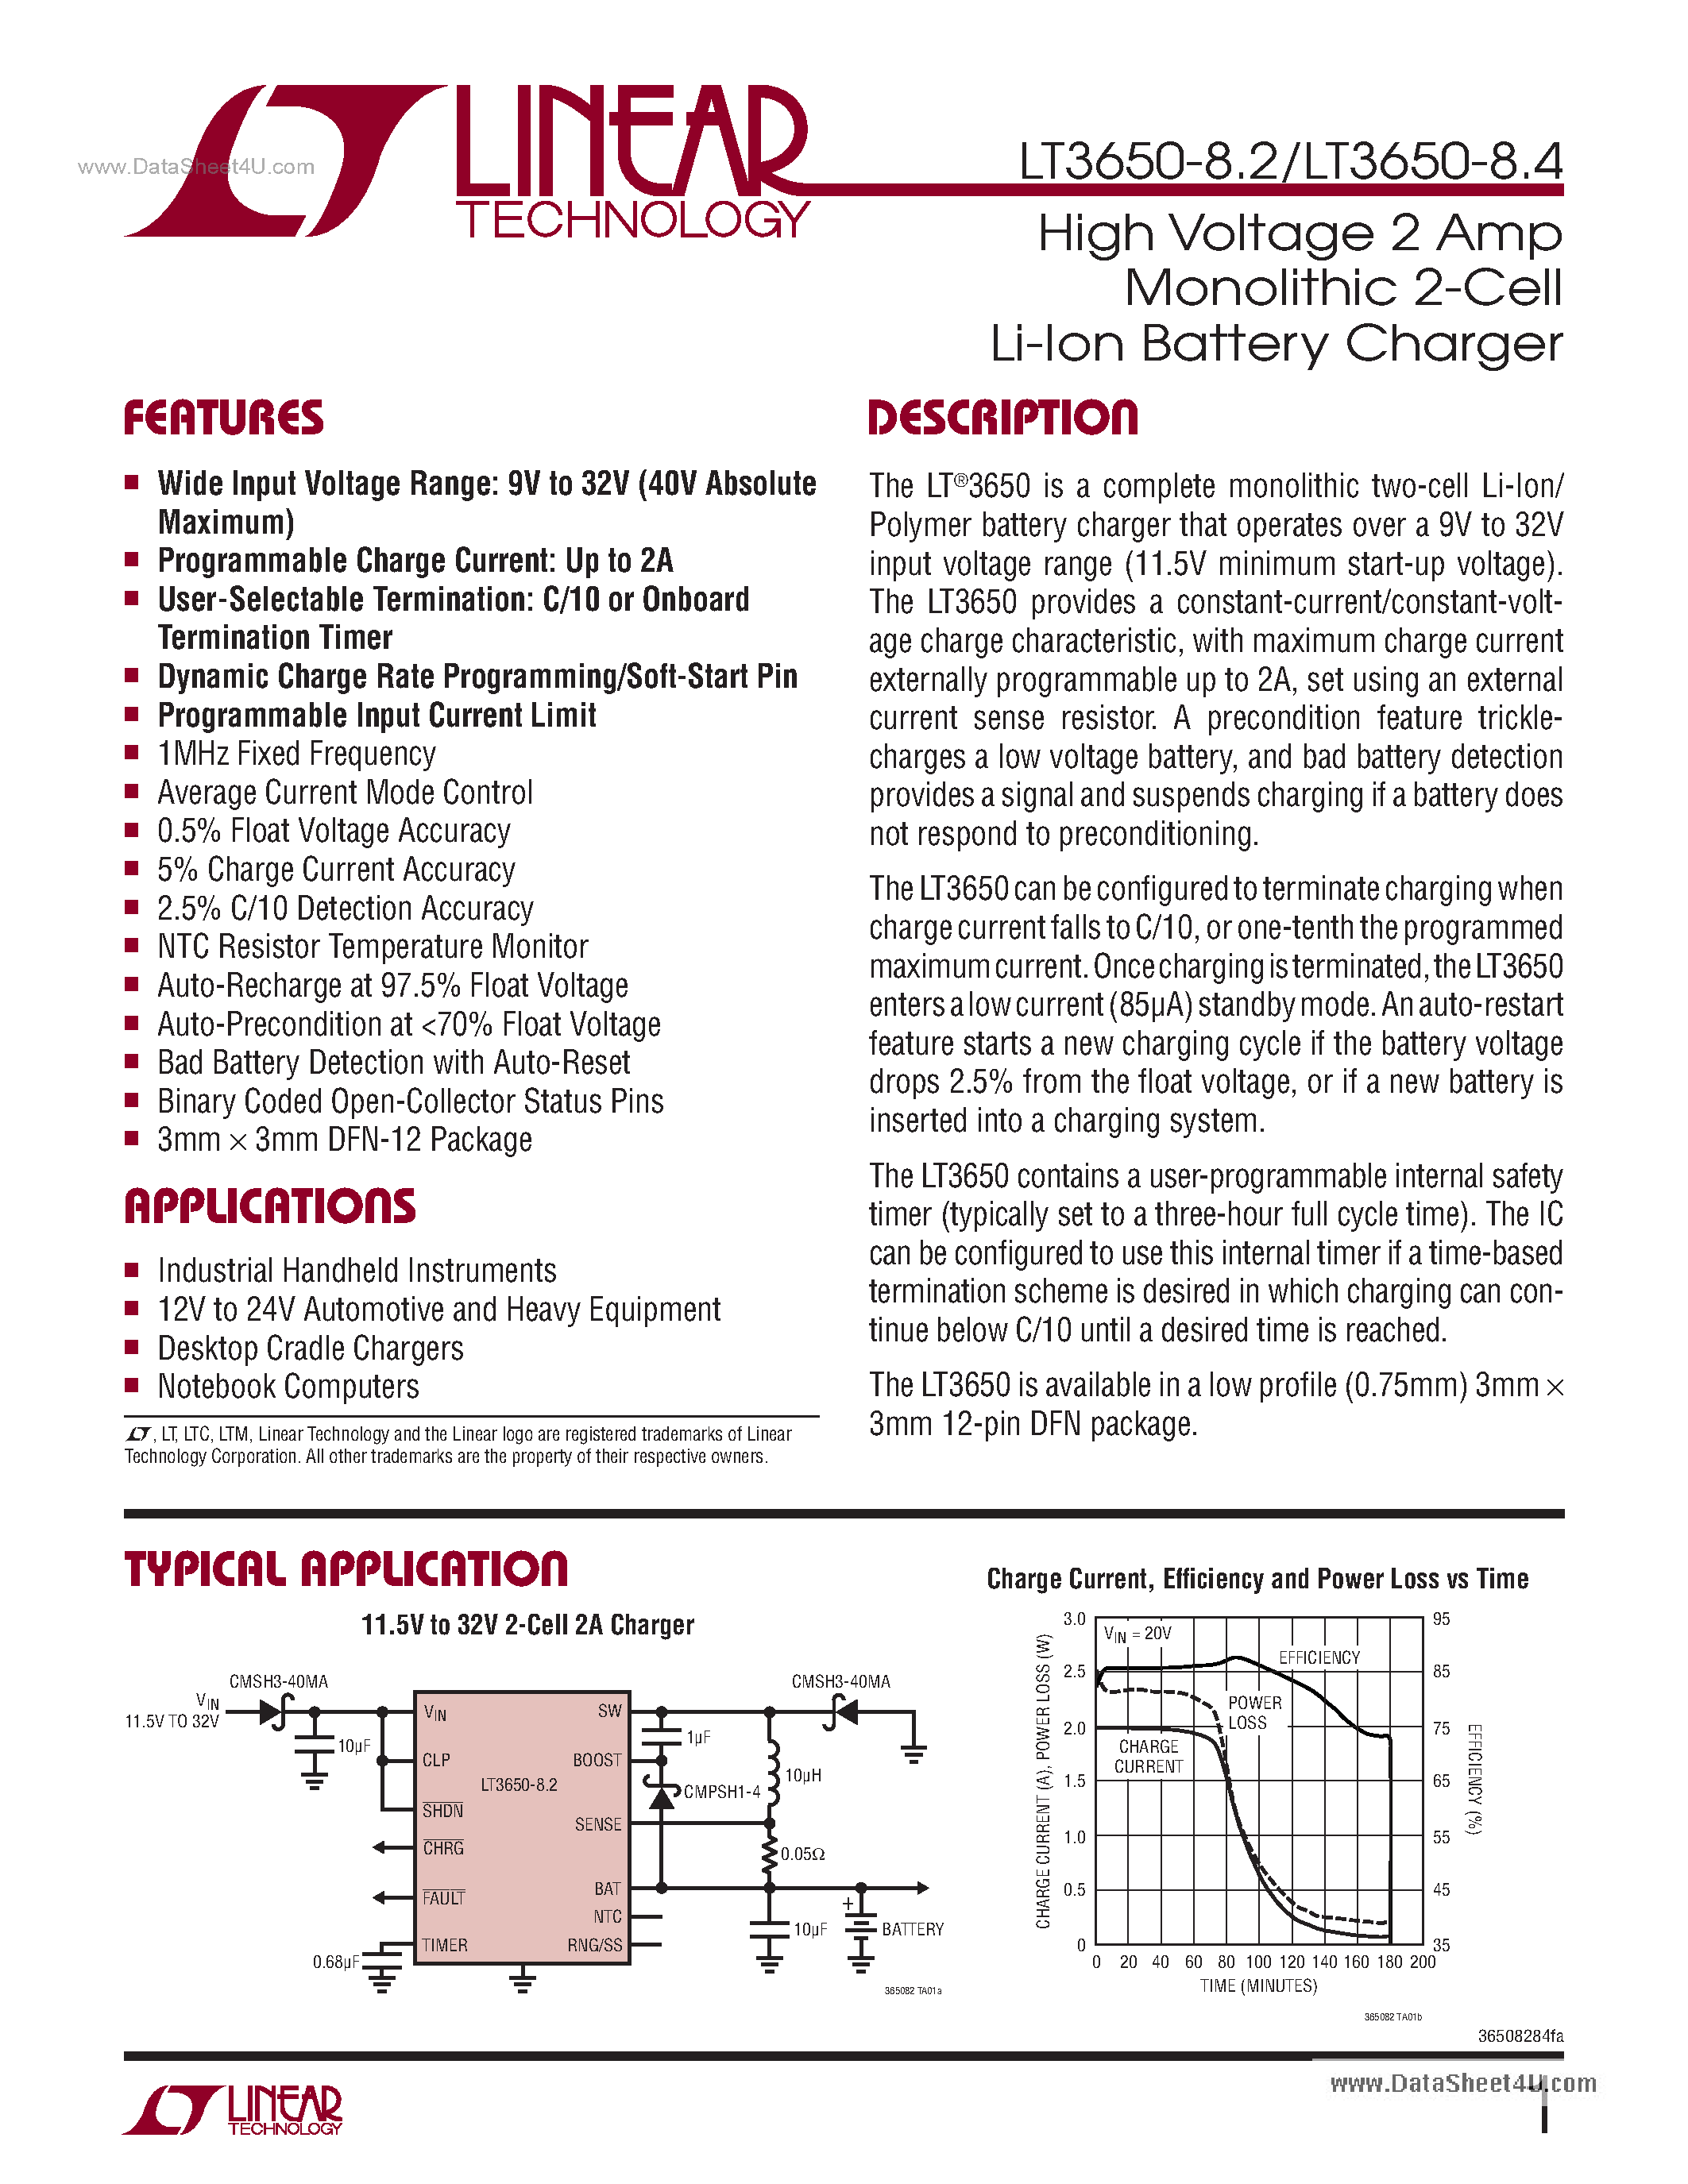 Даташит LT3650-8.2 - (LT3650-8.2 / -8.4) High Voltage 2 Amp Monolithic Li-Ion Battery Charger страница 1